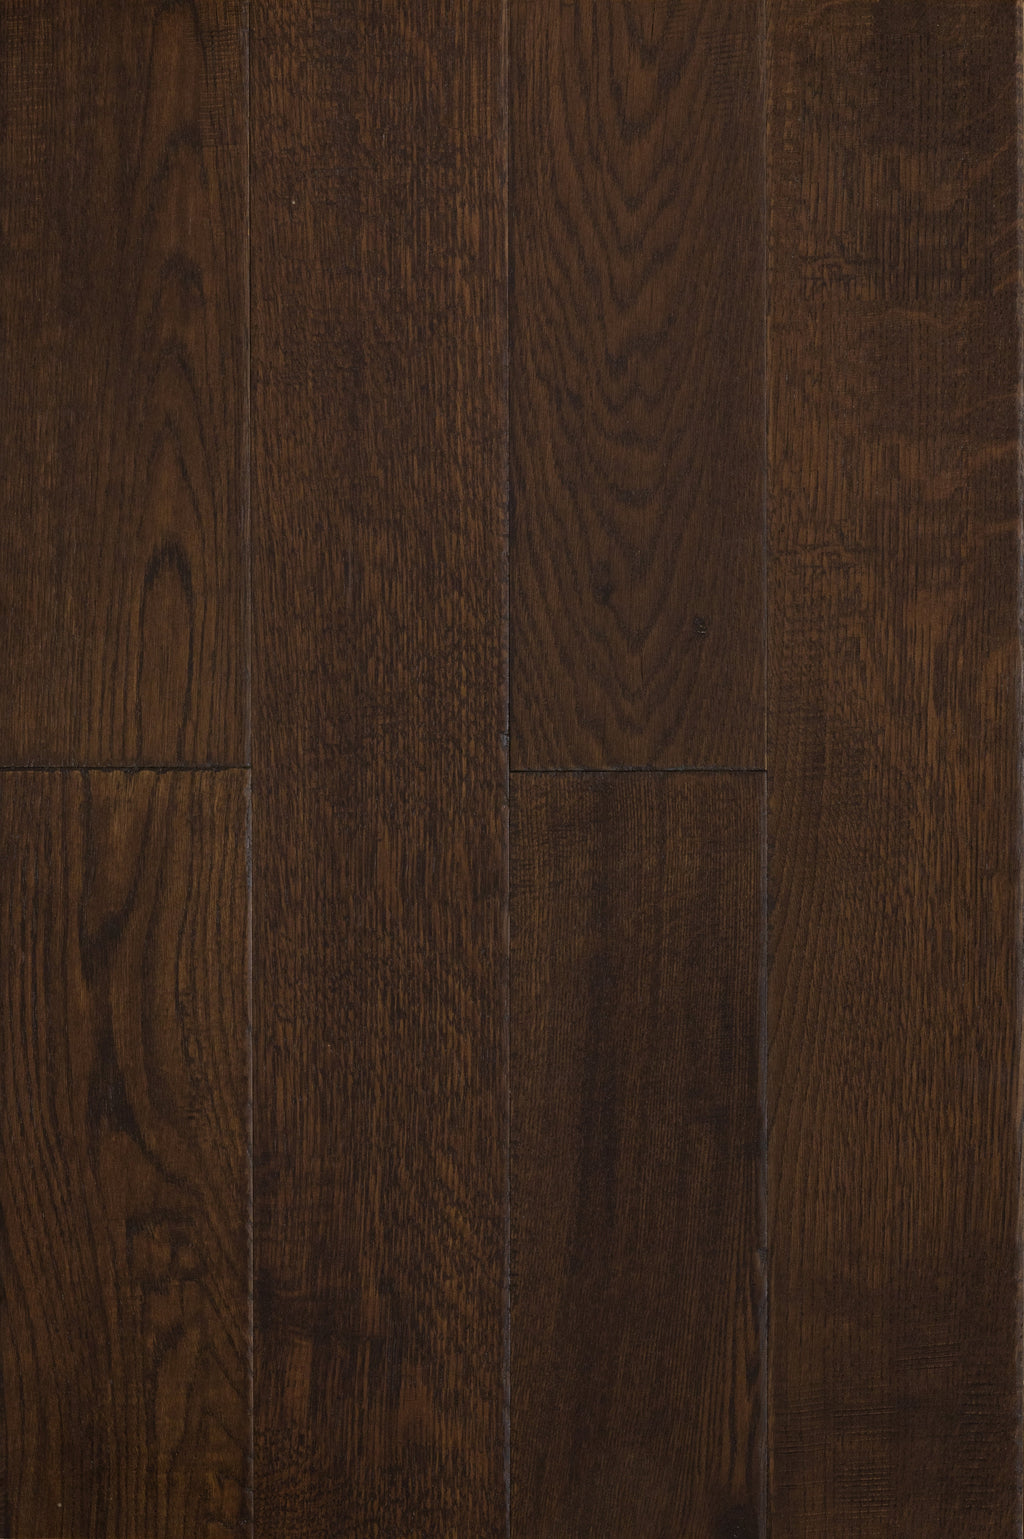 East West Furniture SP-5OH03 Sango Premier Engineered Hardwood Floor - European Oak - 1/2 in x 7 in x Random Length Handscraped, 26.24 sqft/box, Autumn Brown